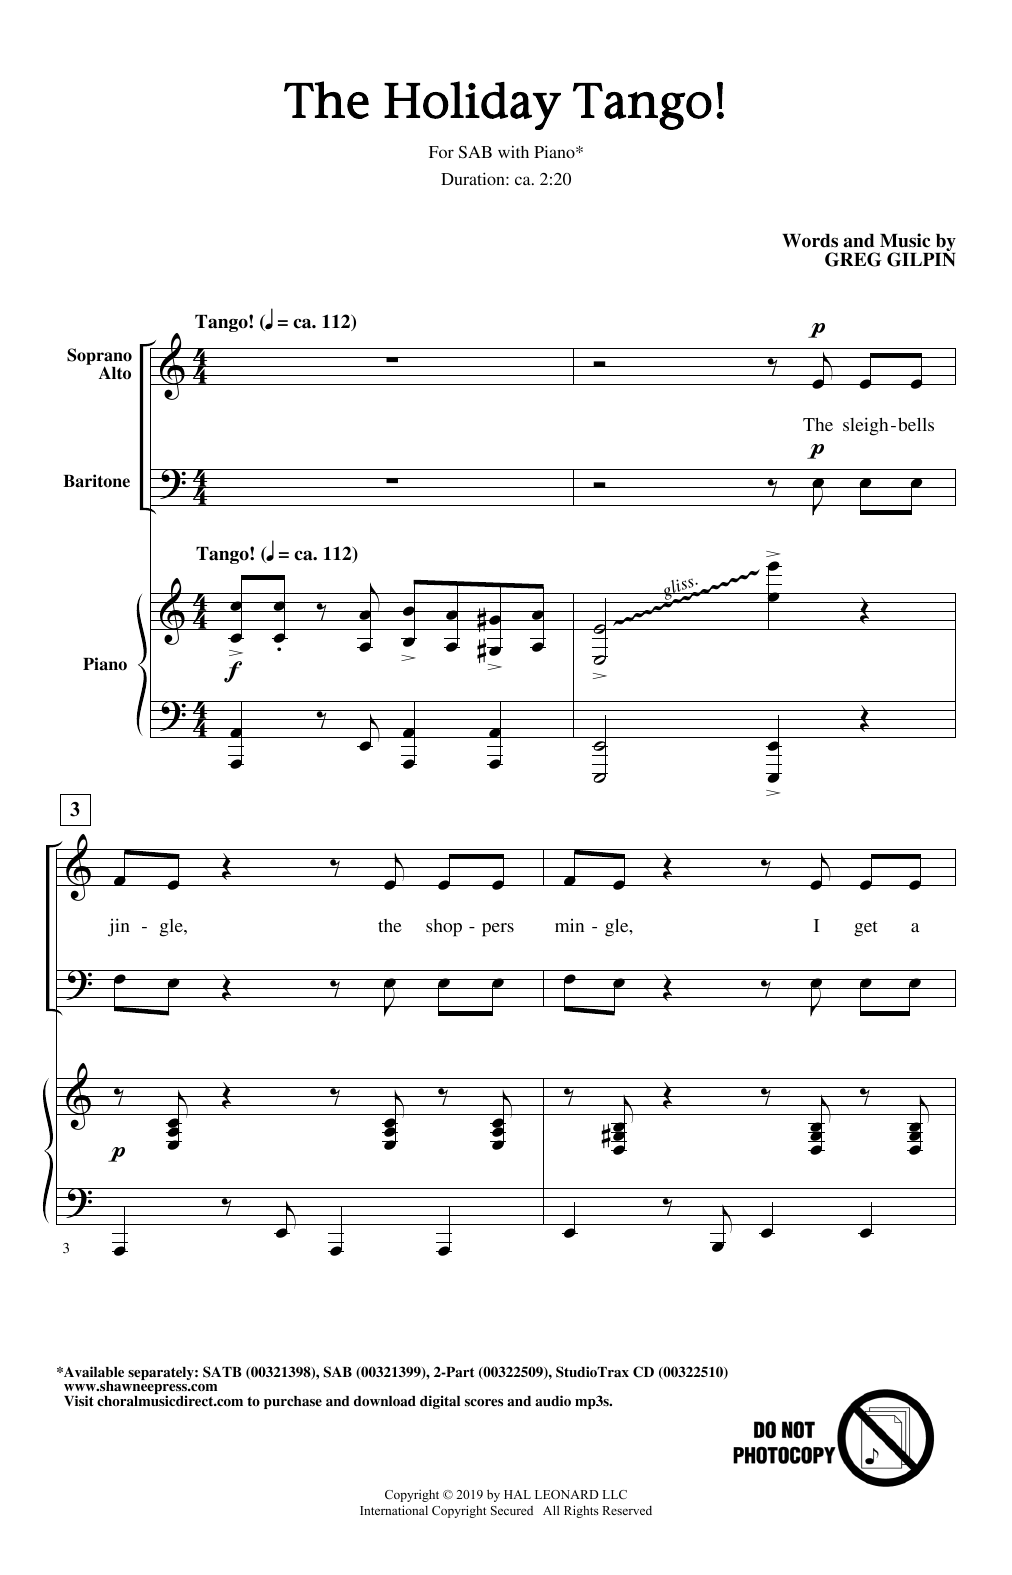 Greg Gilpin The Holiday Tango Sheet Music Notes & Chords for SAB Choir - Download or Print PDF